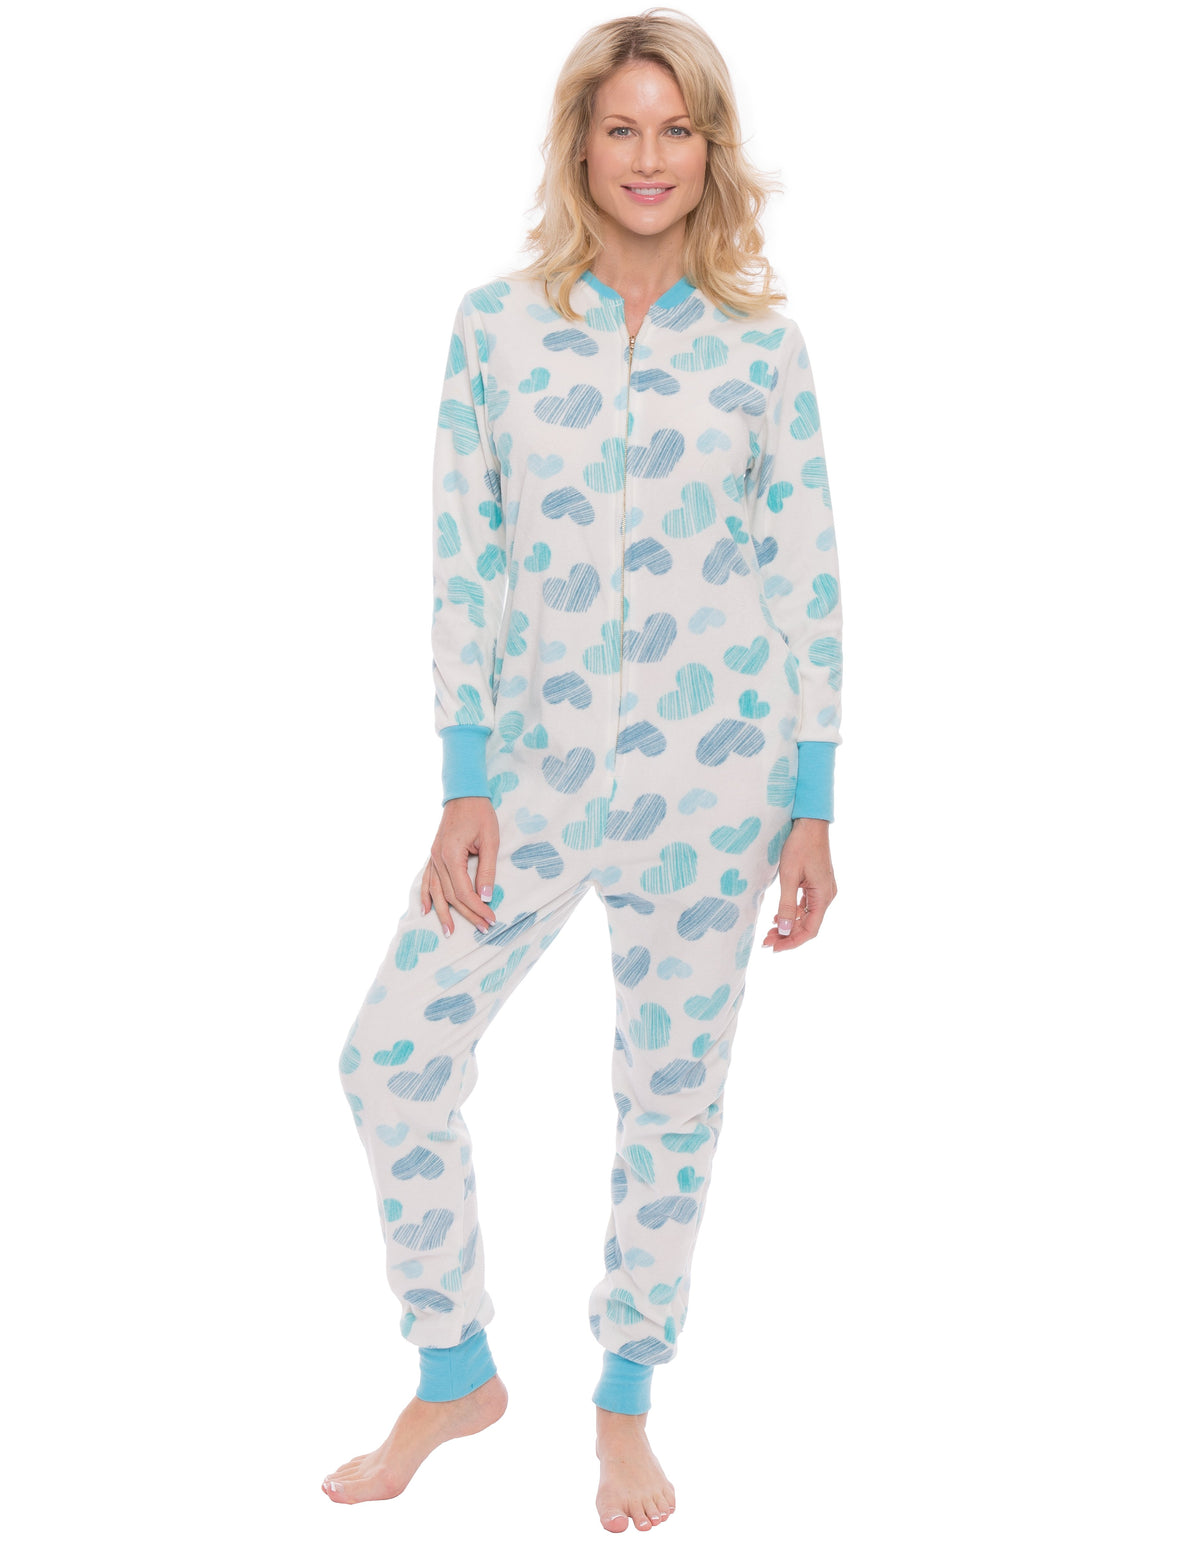 Women's Premium Microfleece Onesie Jumper Pajama - Scribbled Hearts White/Blue